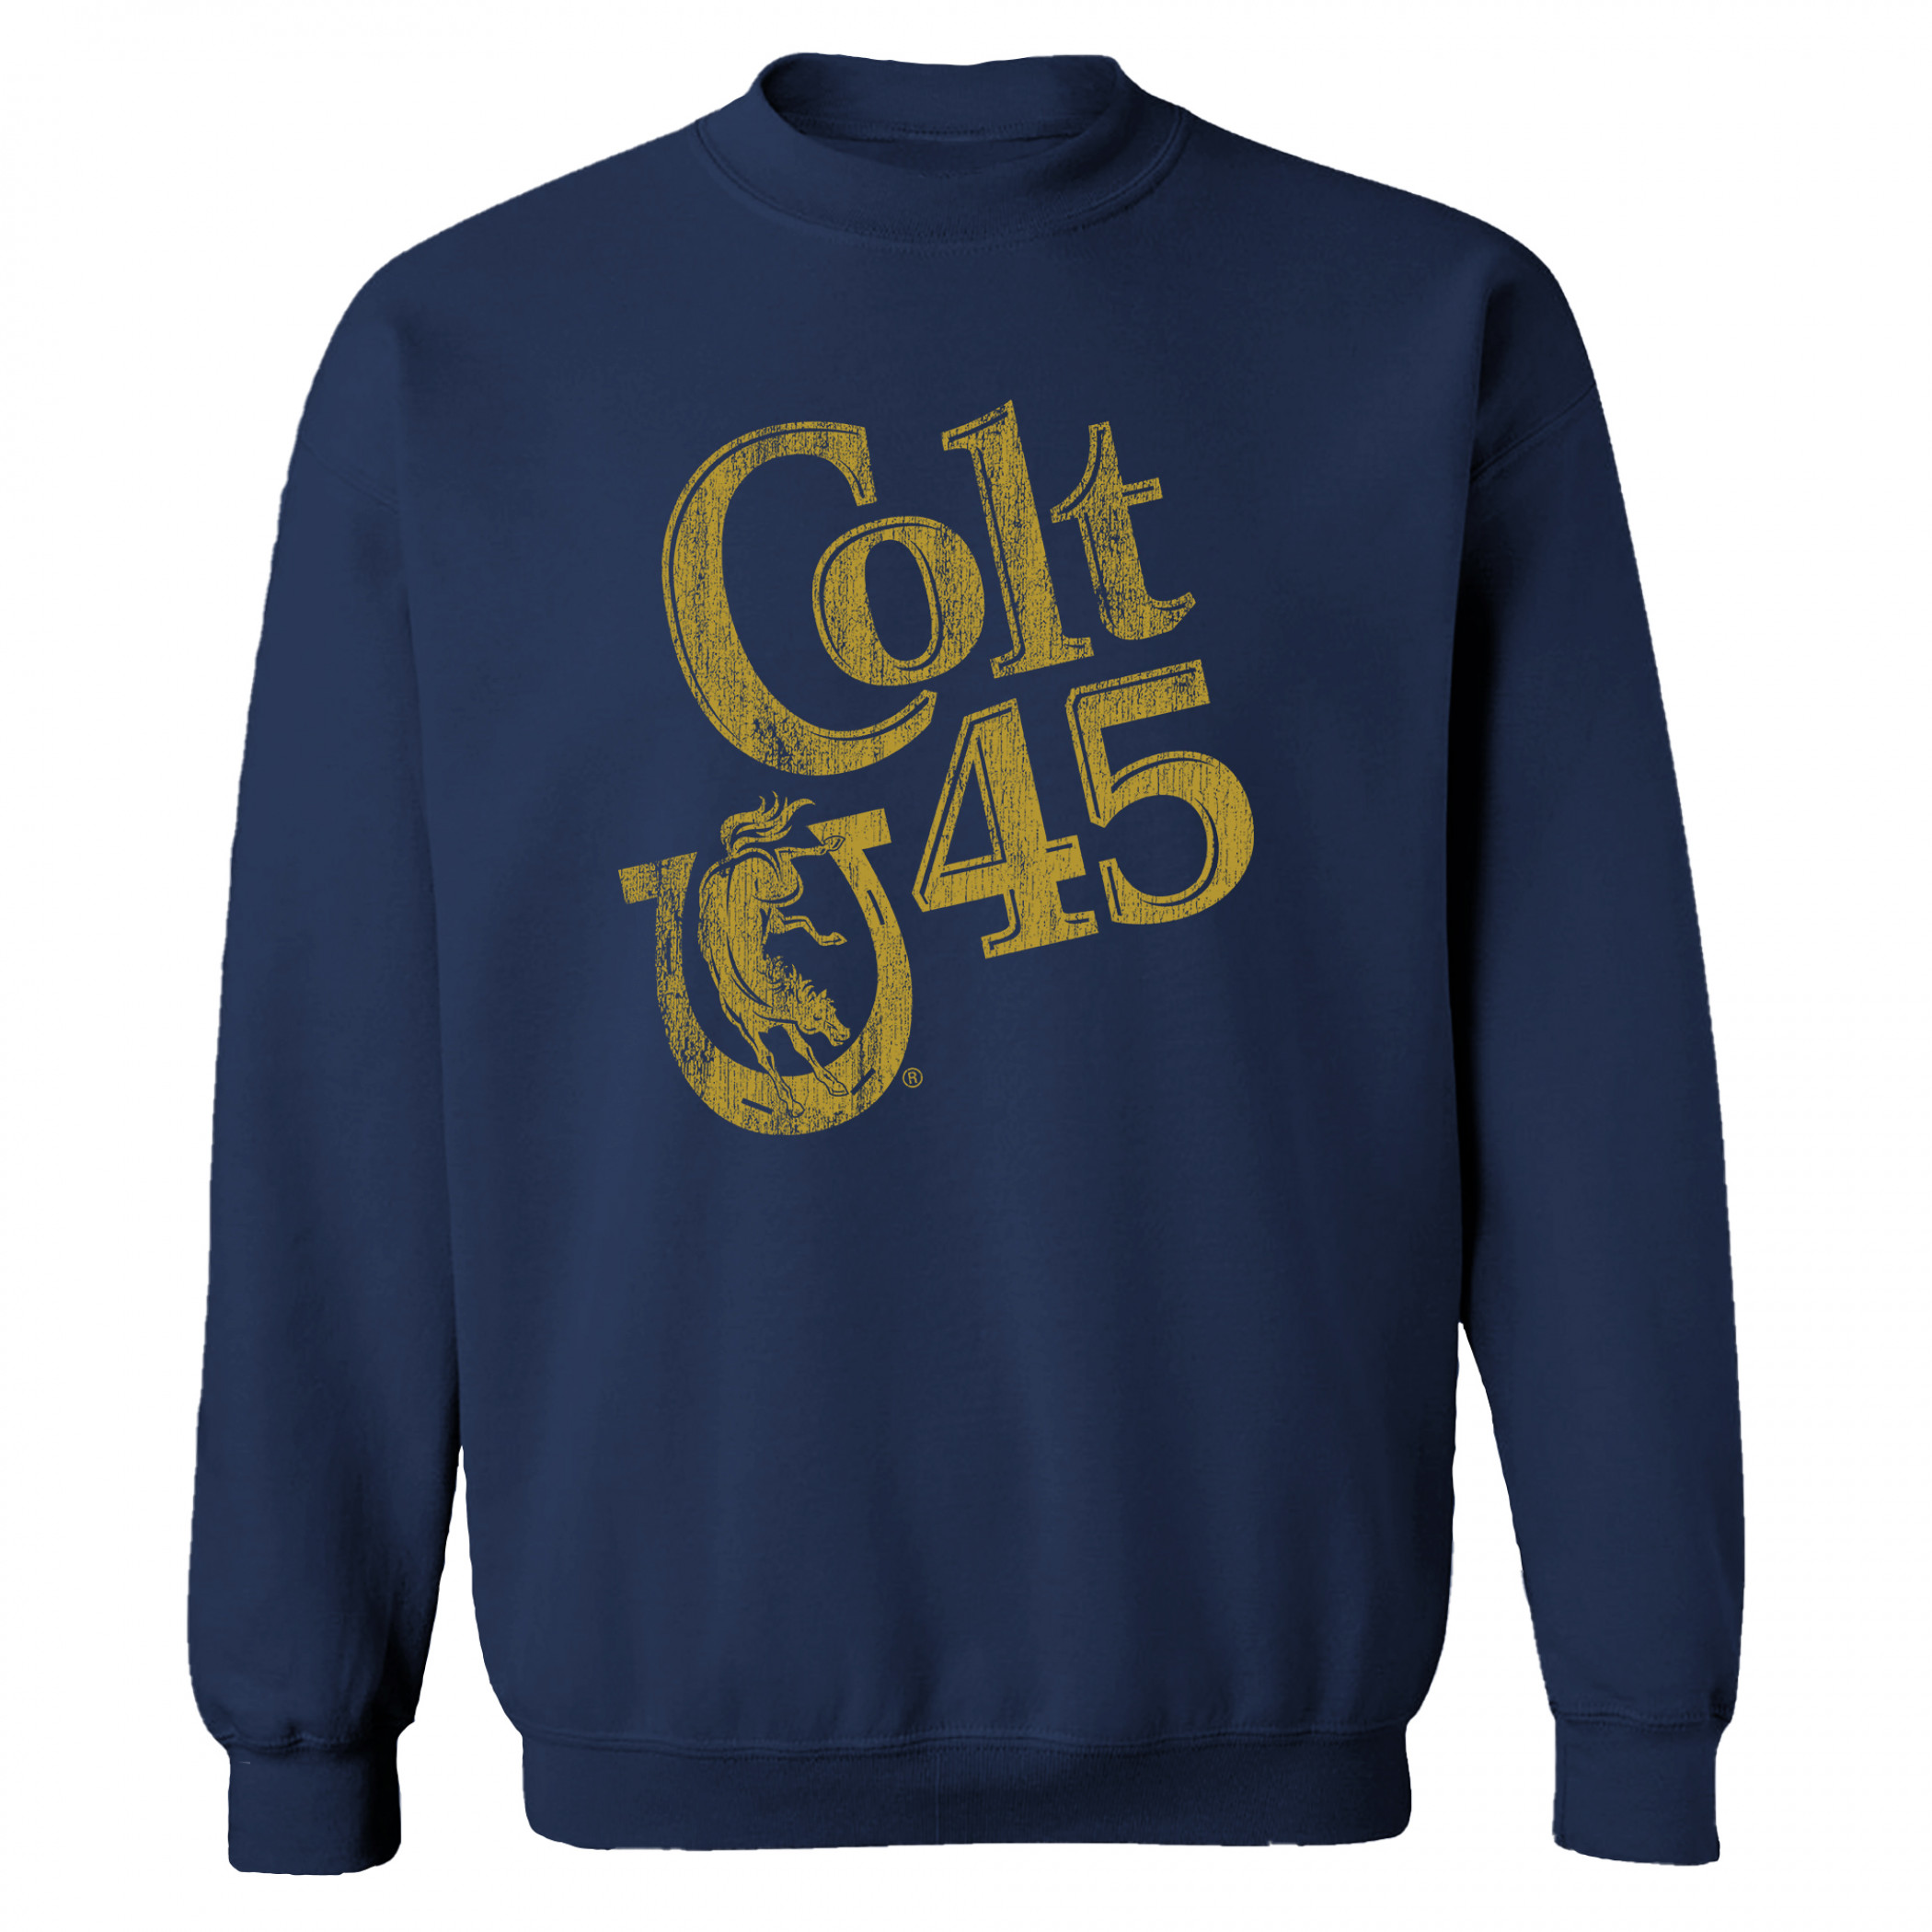 Colt 45 Distressed Logo Navy Crew Neck Sweatshirt